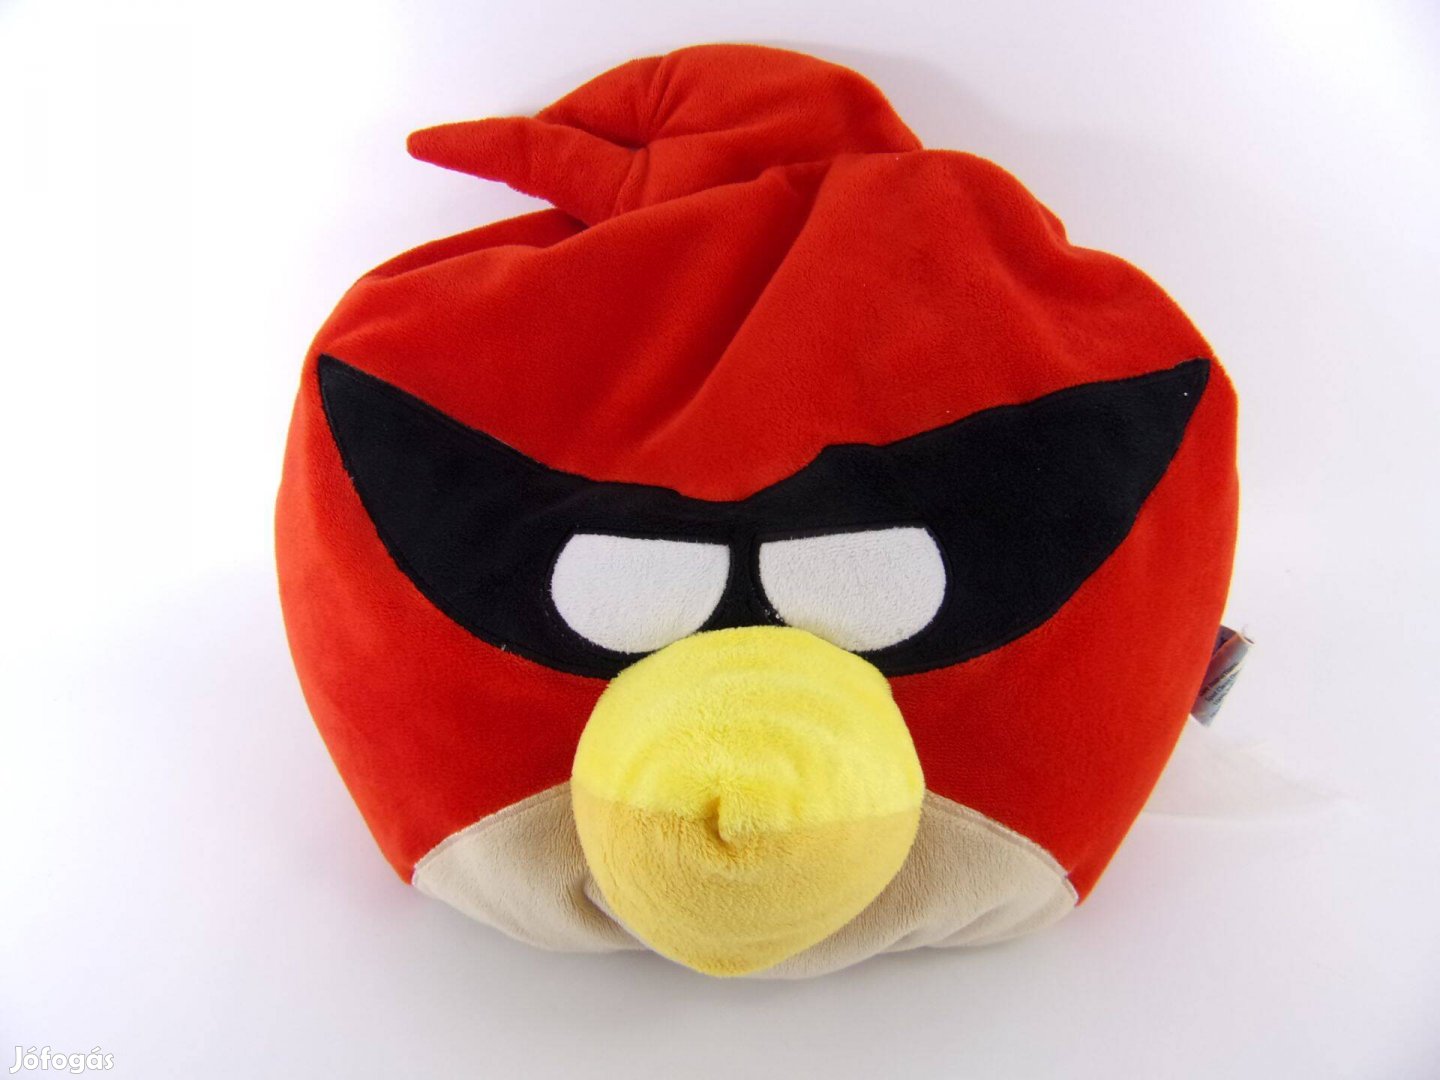 Angry Birds nagy plüss figura